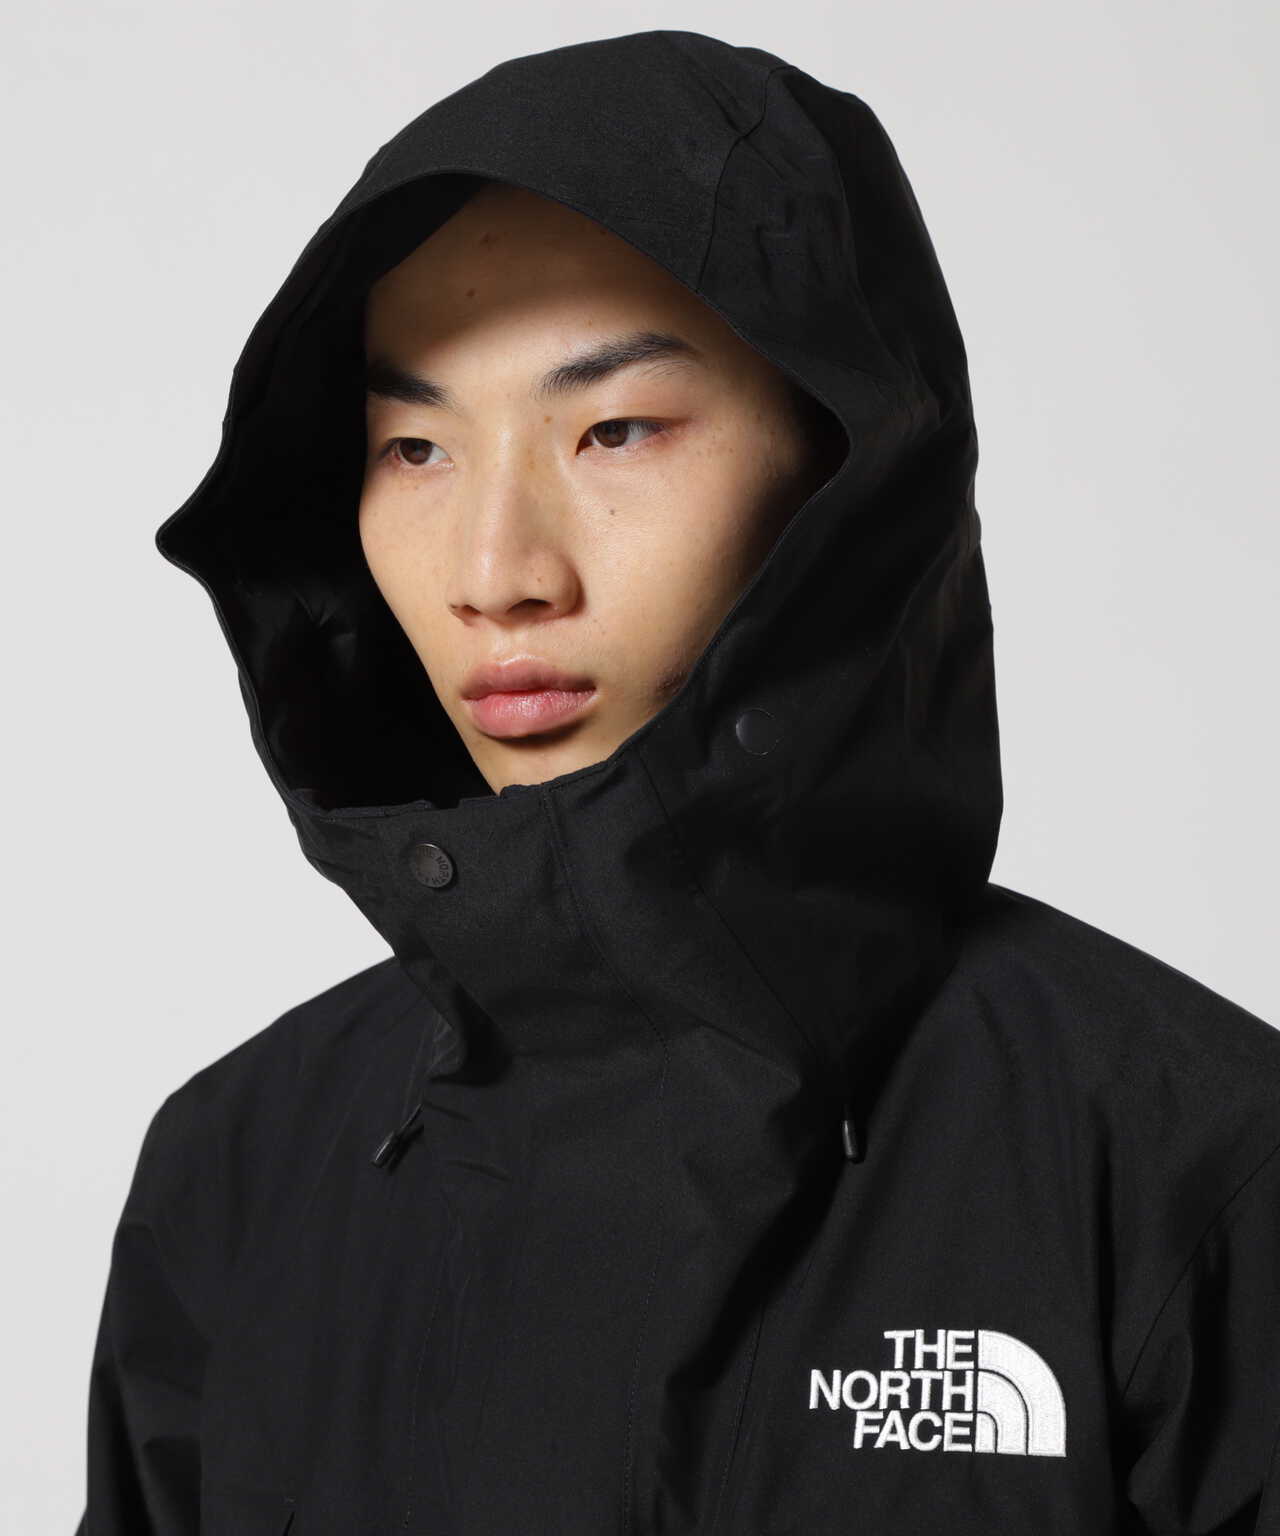 THE NORTH FACE(ザ・ノース・フェイス) Mountain Jacket マウンテン